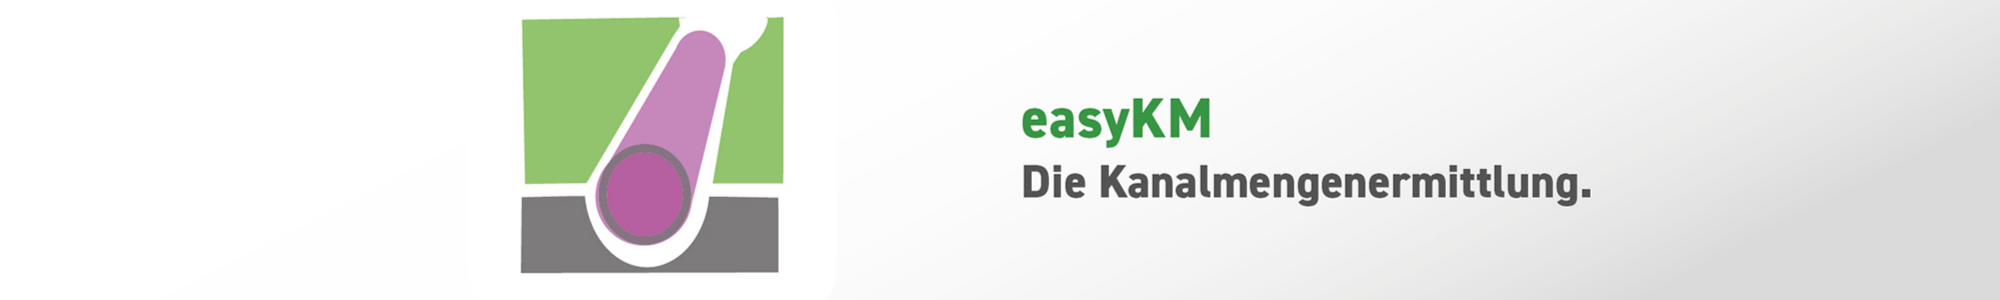 easyKM - isl-kocher GmbH